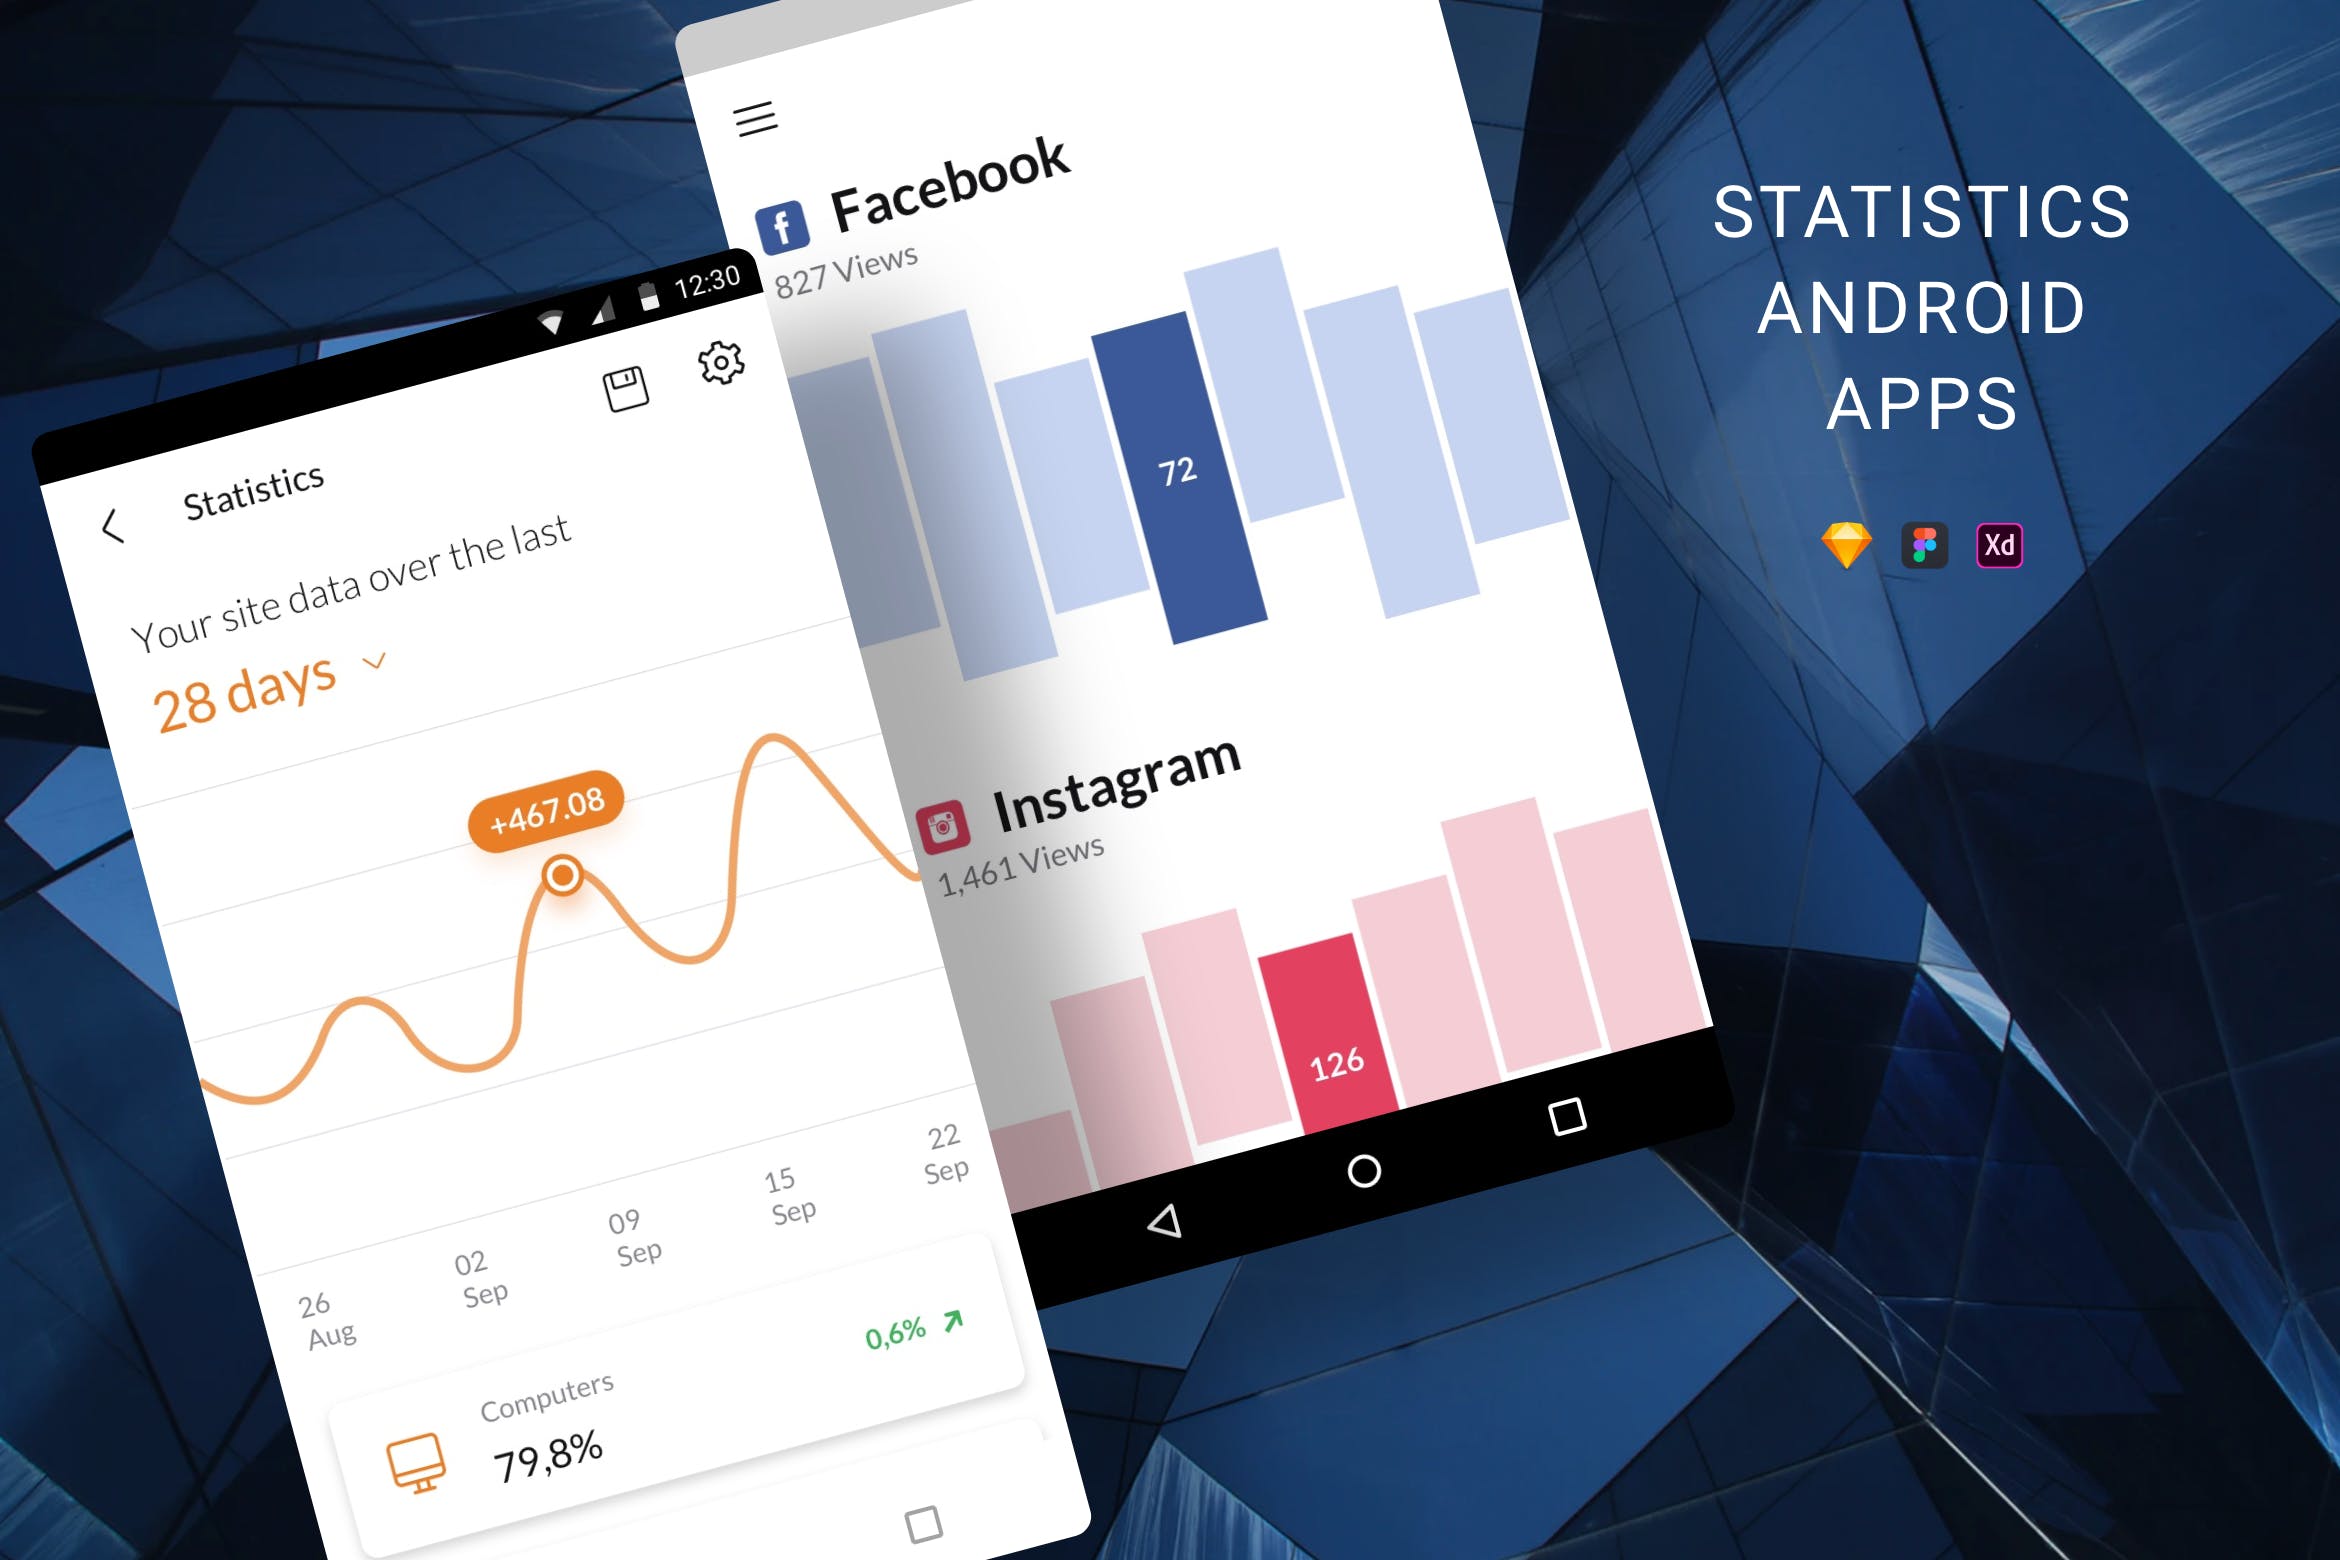 Android应用程序简约统计界面设计第一素材精选模板 Statistics Android Apps插图